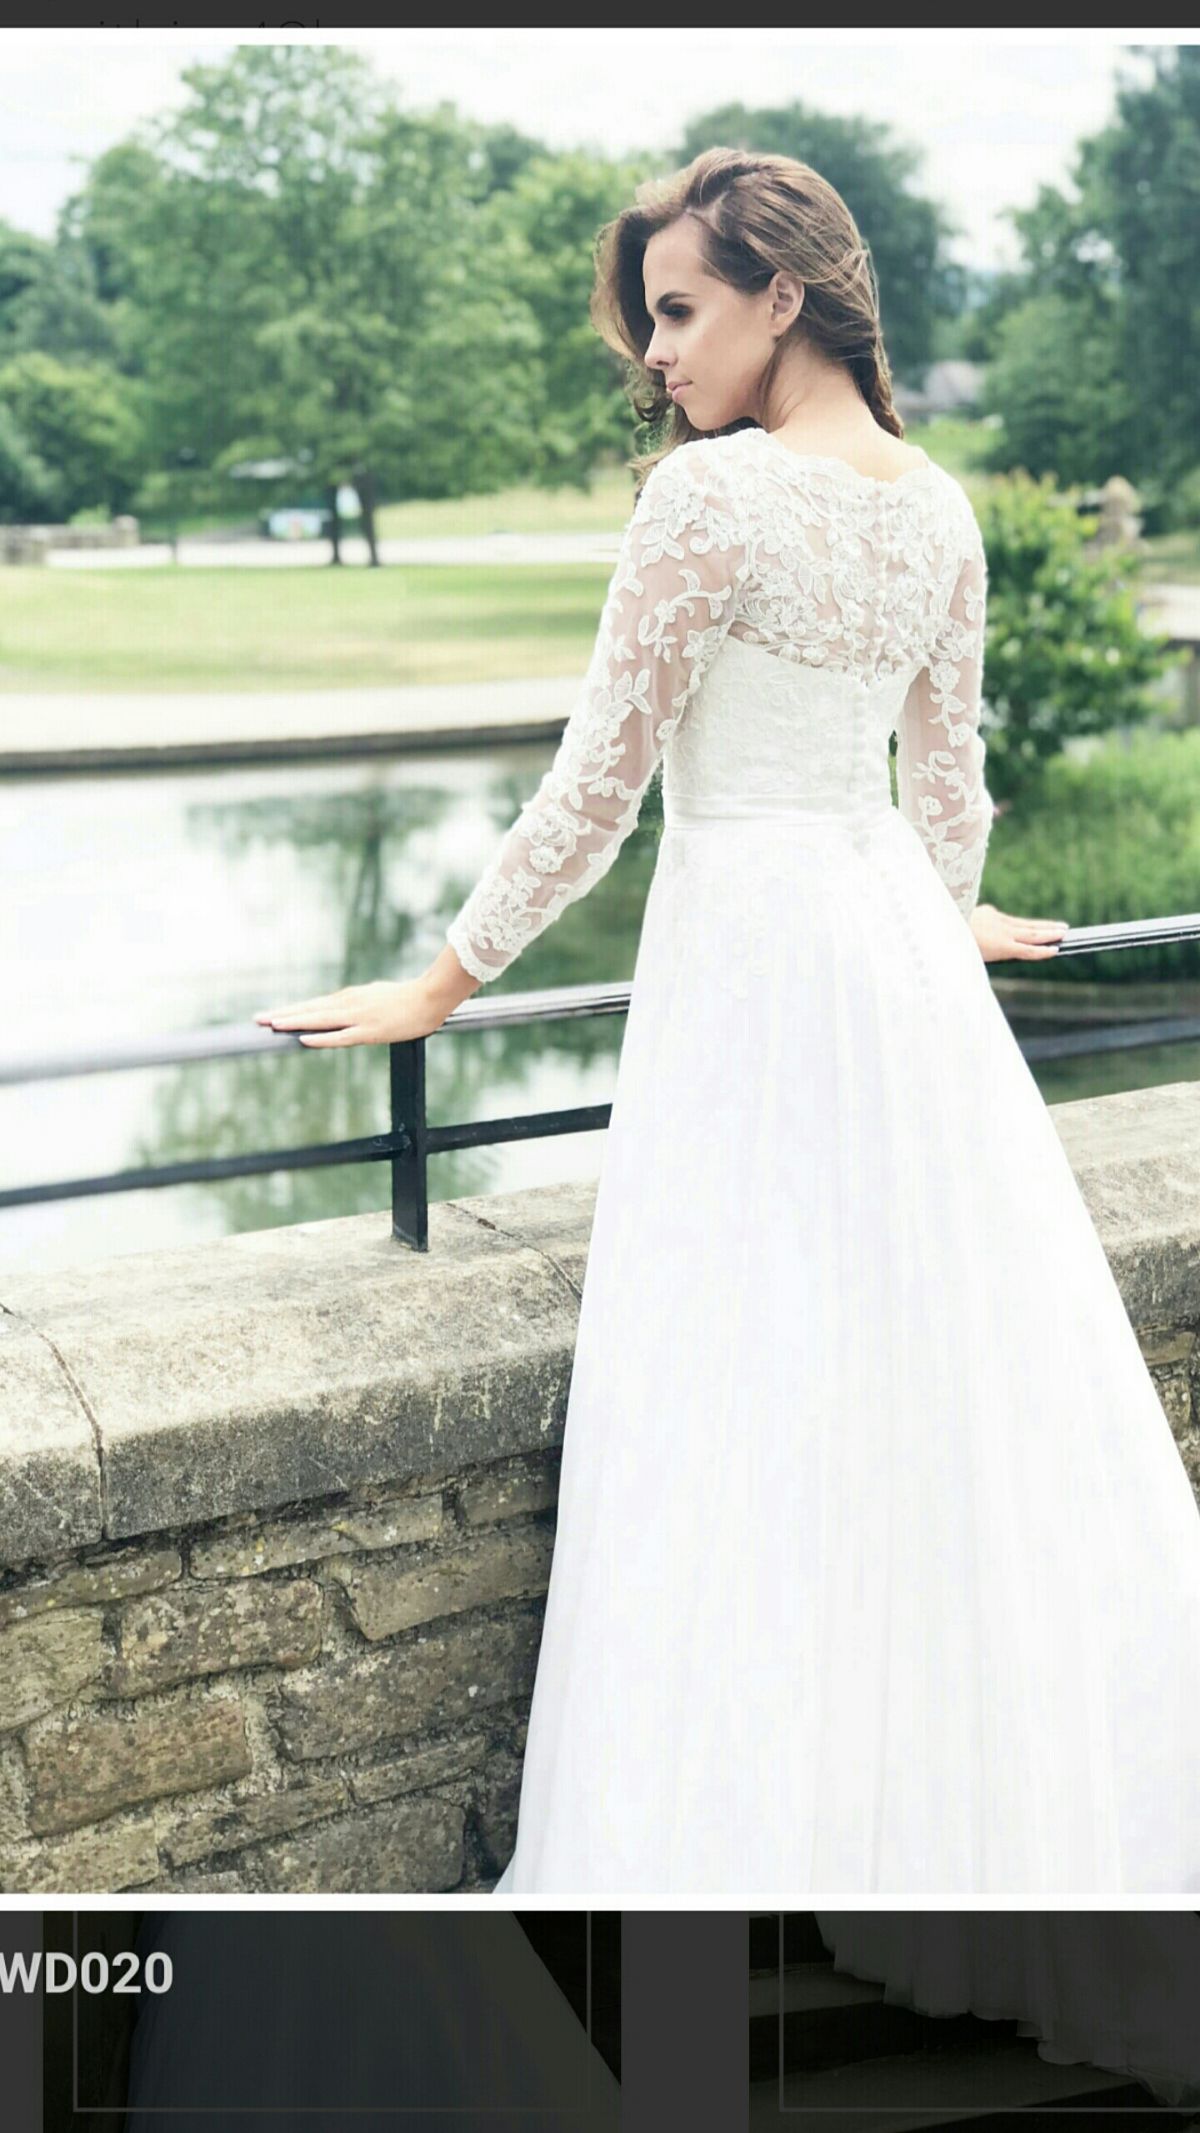 Best Dress 2 Impress Bridal-Image-81